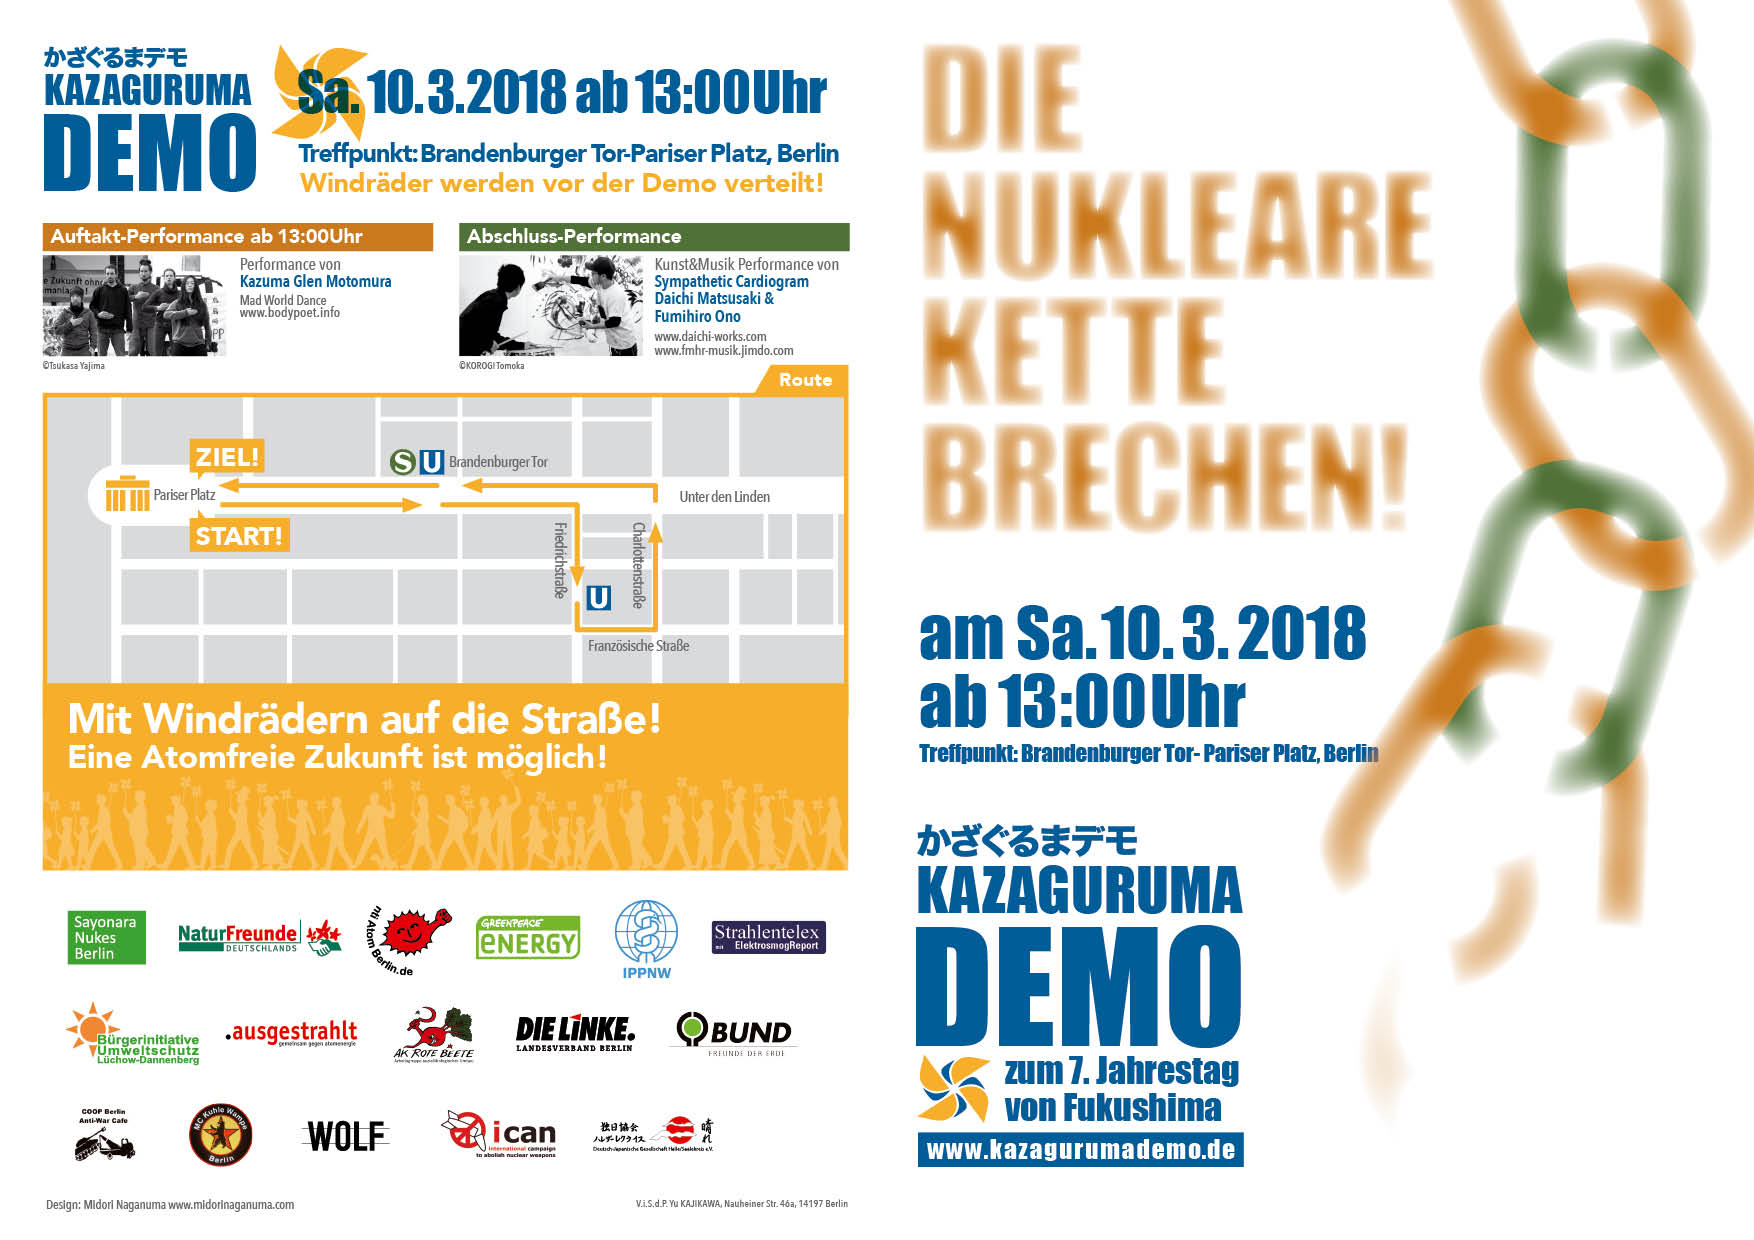 Kazaguruma demo flyer with Demo route 2018